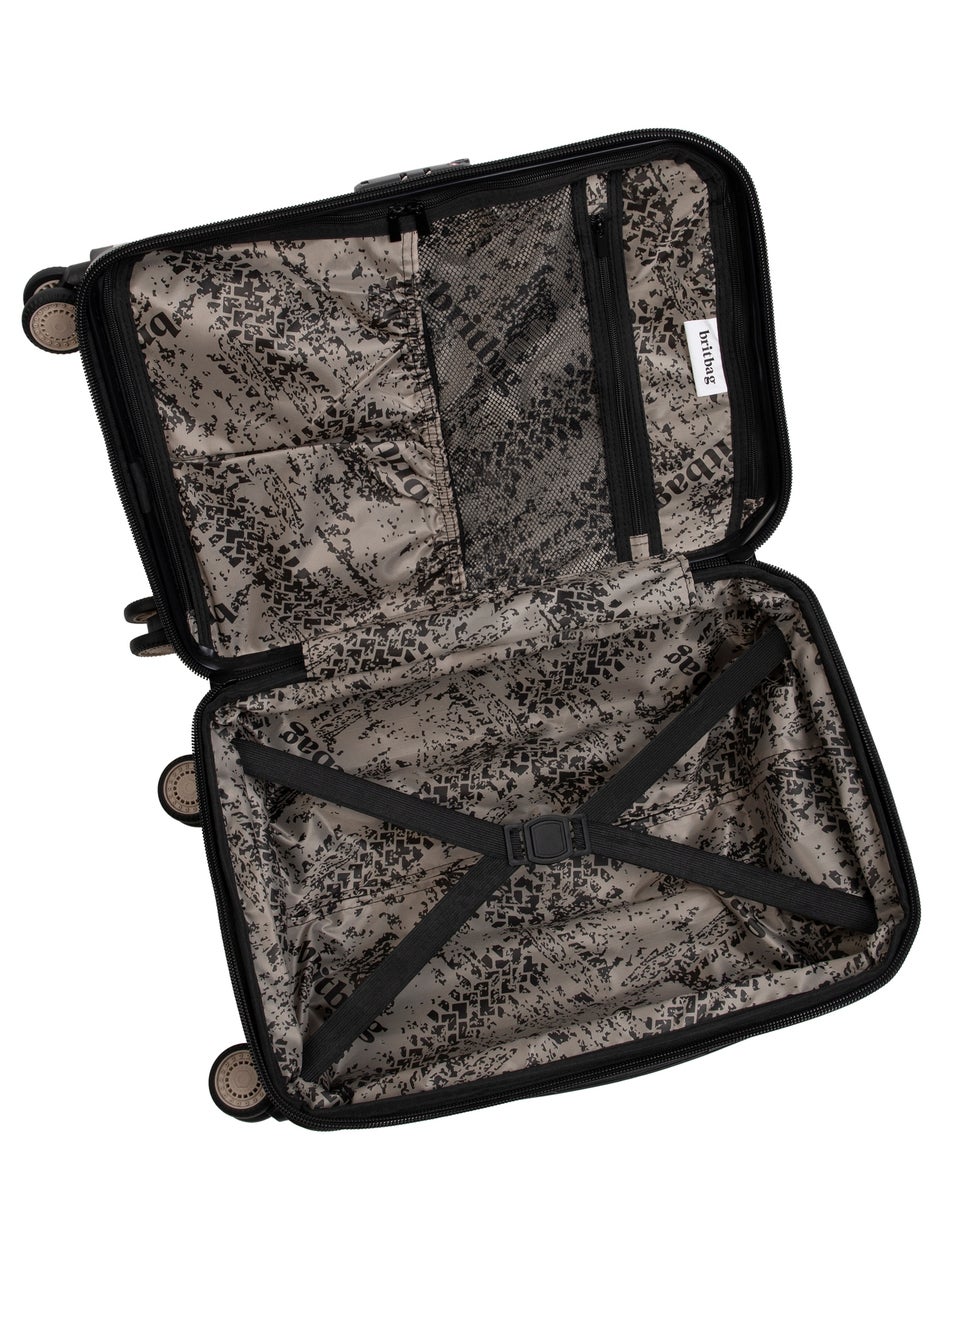 BritBag Annamite Skin Black/Red Geo Print Cabin Suitcase with TSA Lock